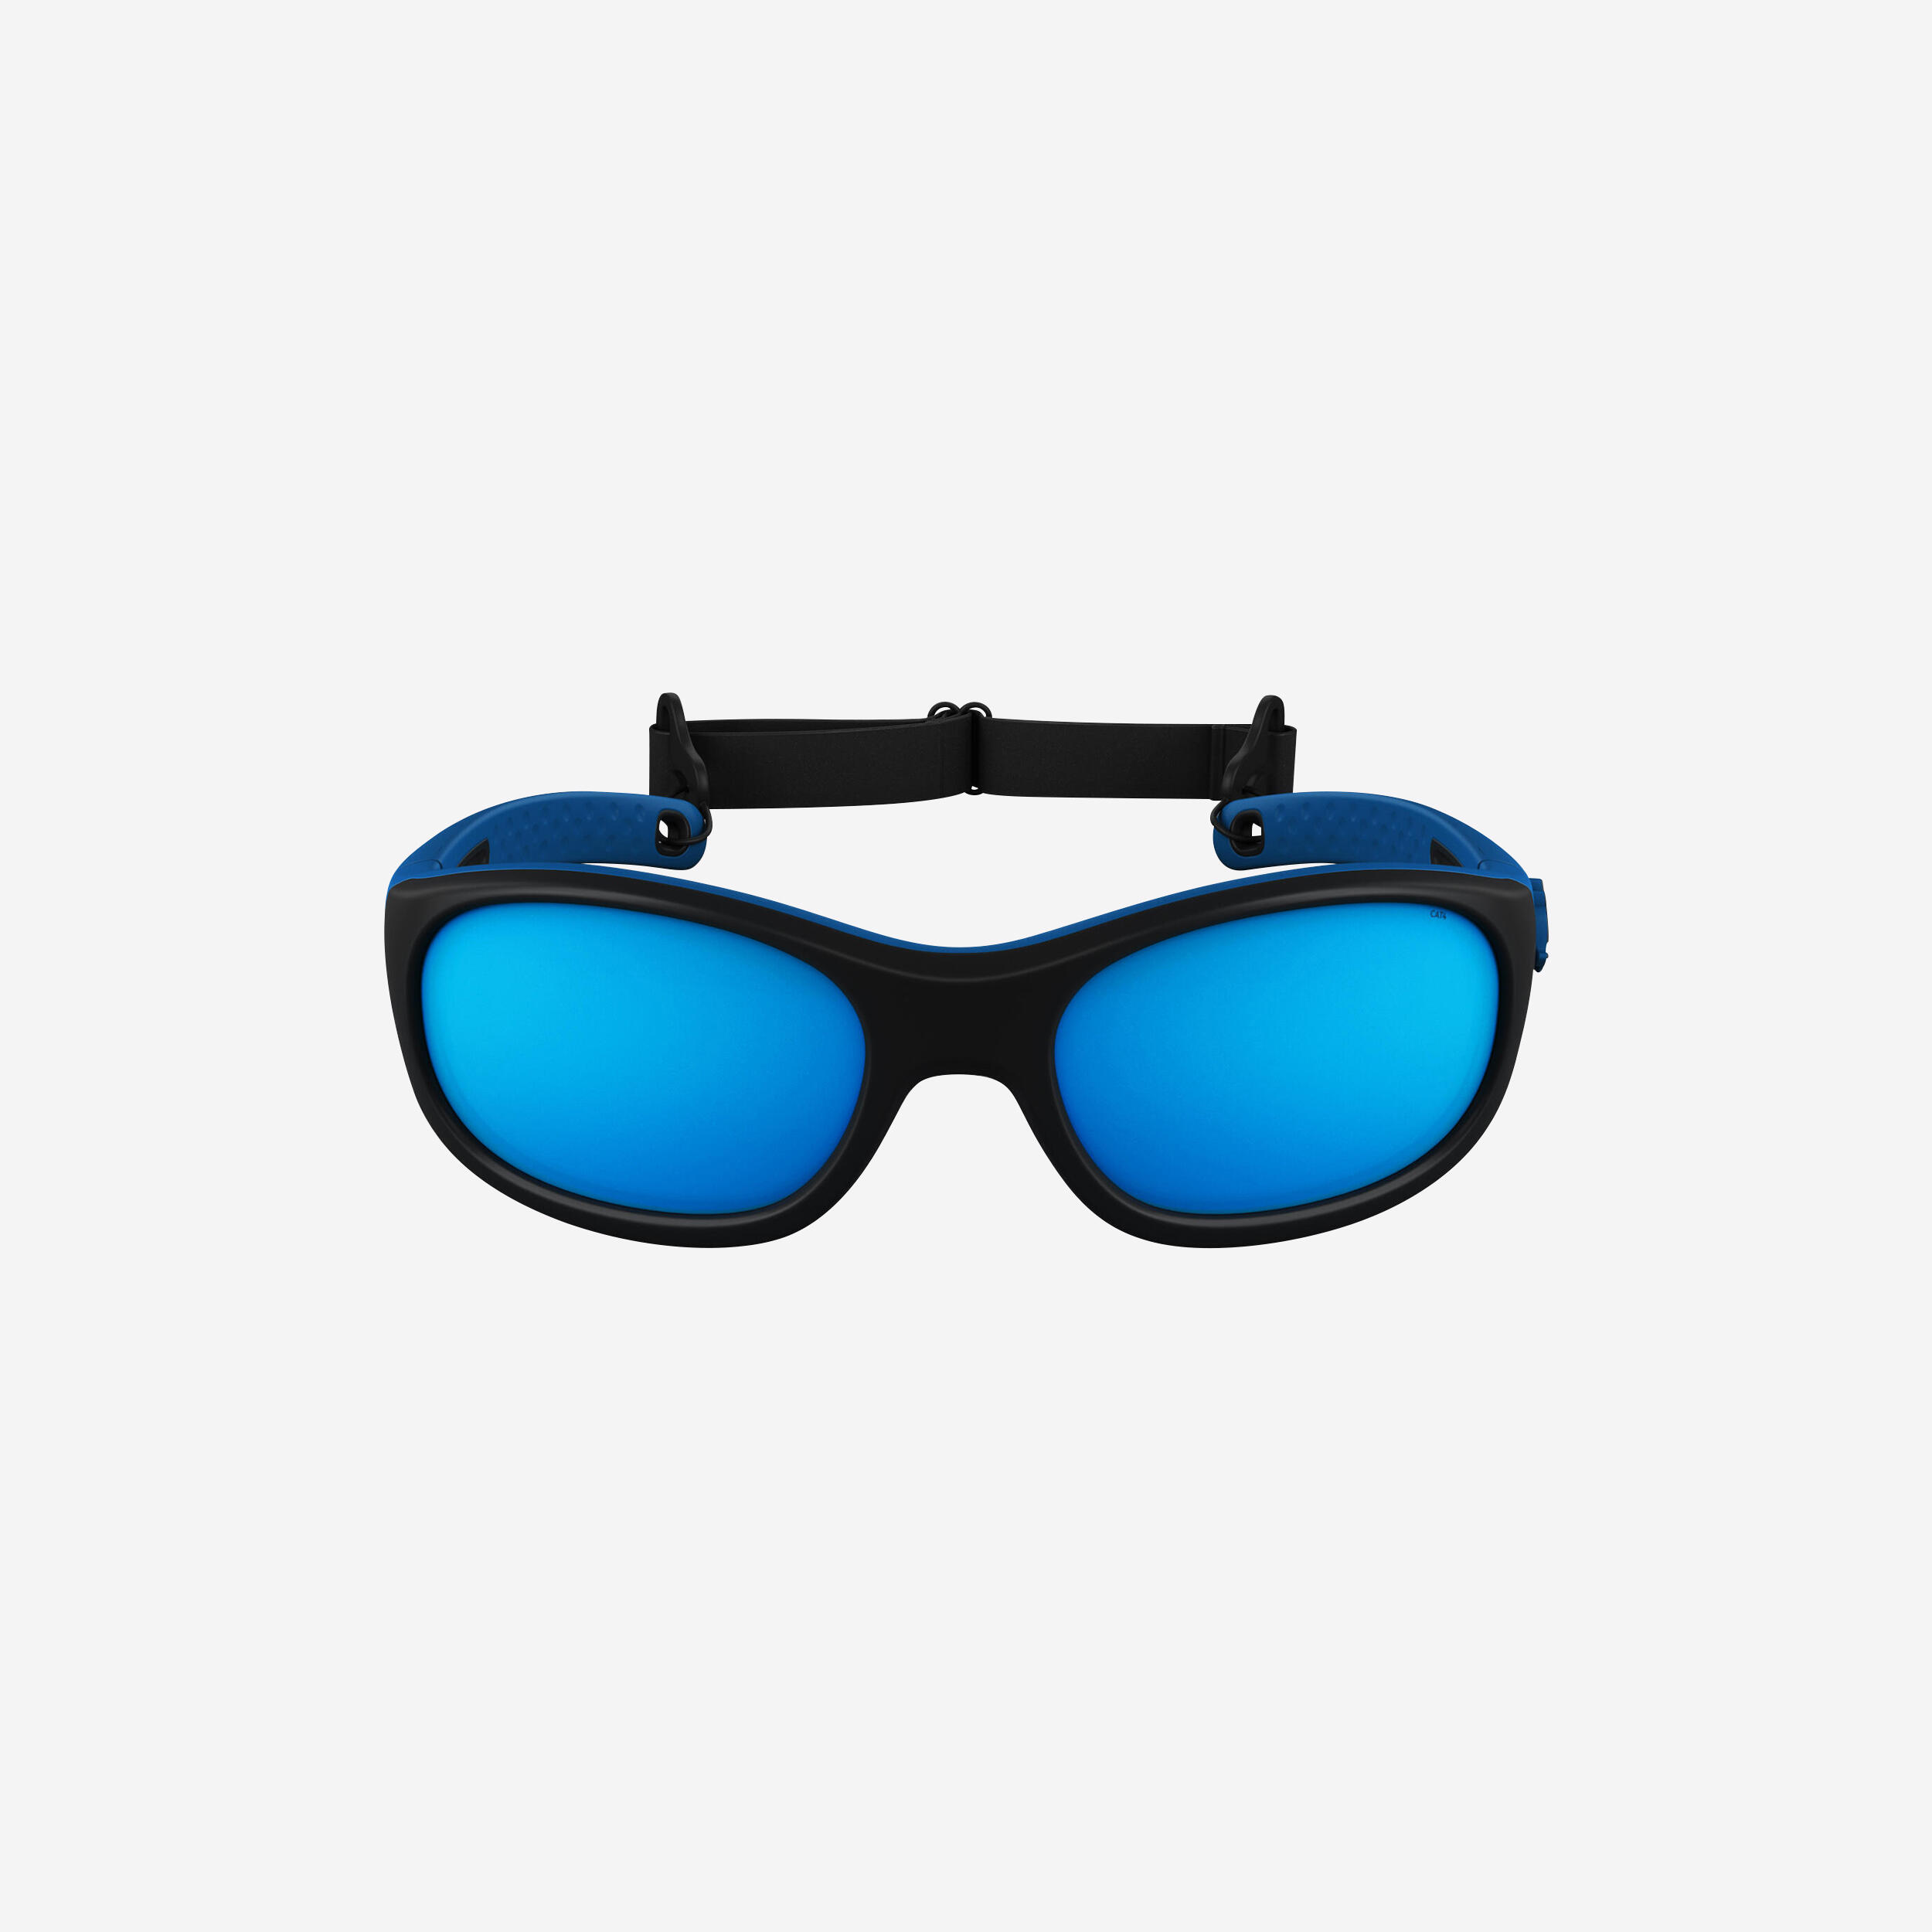 Kid-Friendly Sunglasses for Maximum Sun Safety